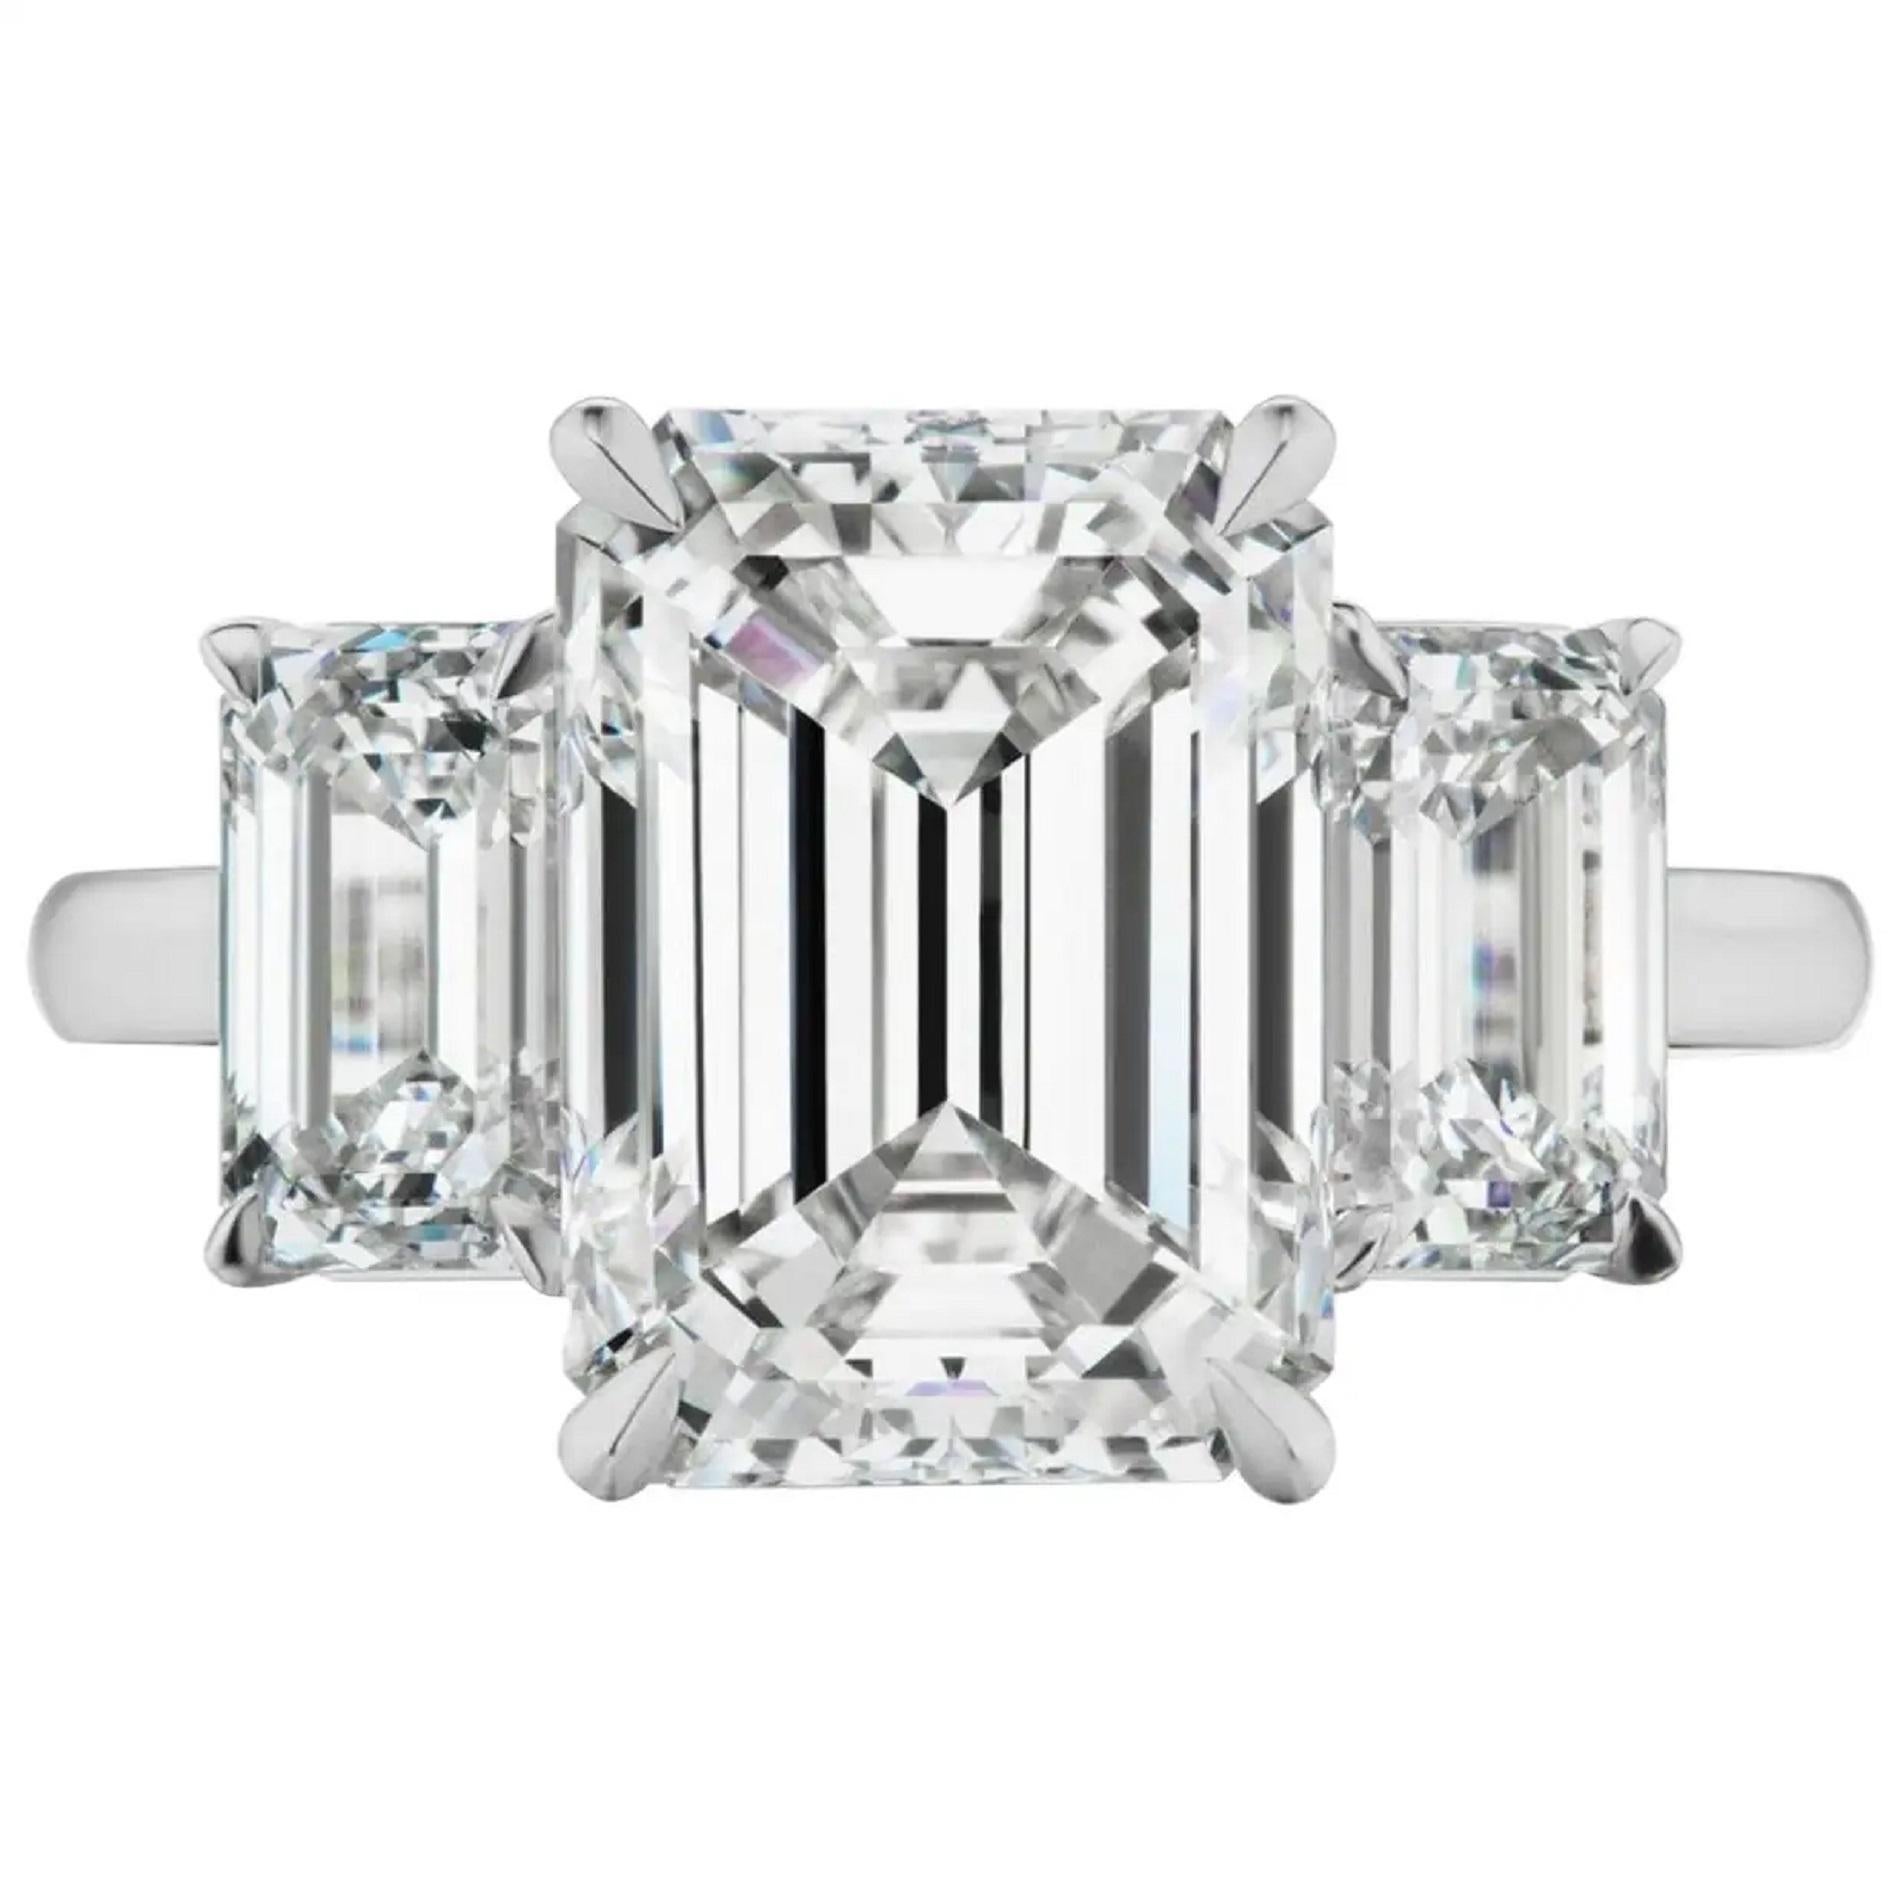 An exquisite three stone diamond ring 

